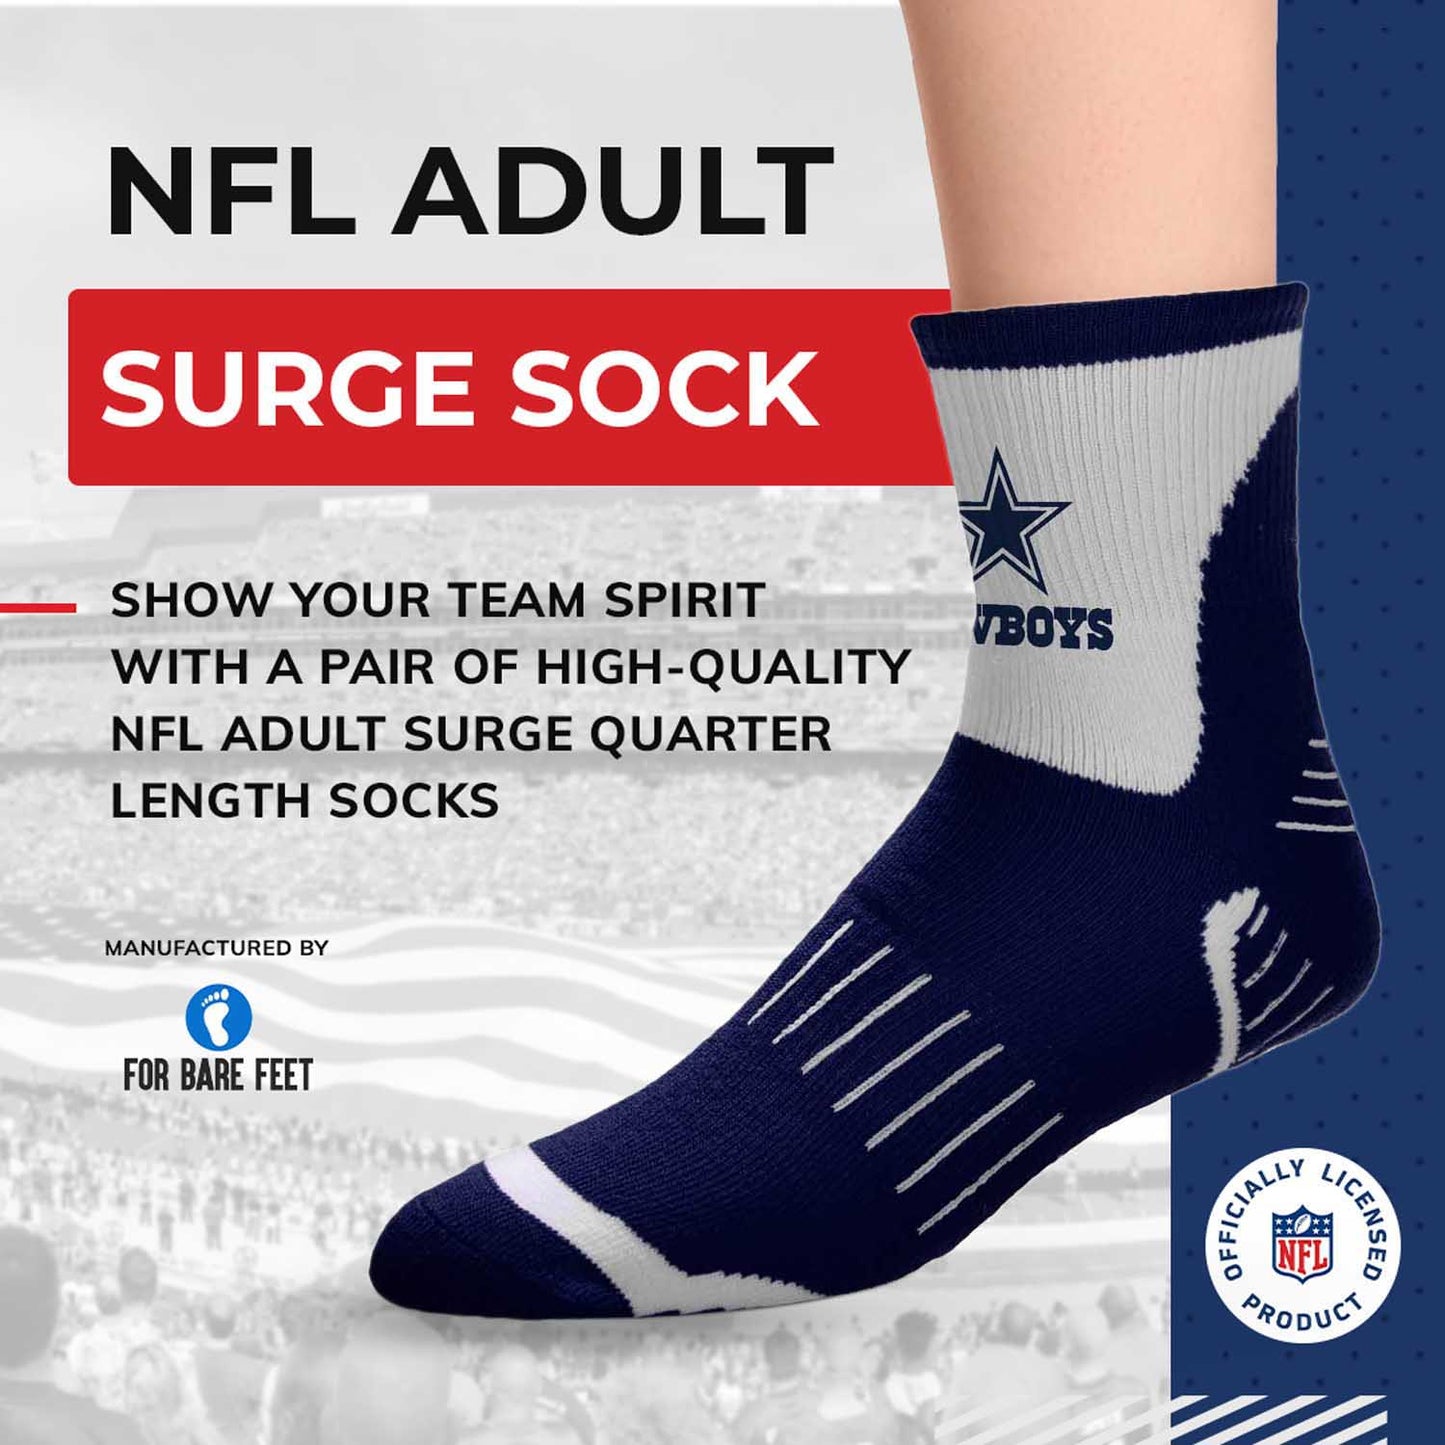 Dallas Cowboys NFL Performance Quarter Length Socks - Navy